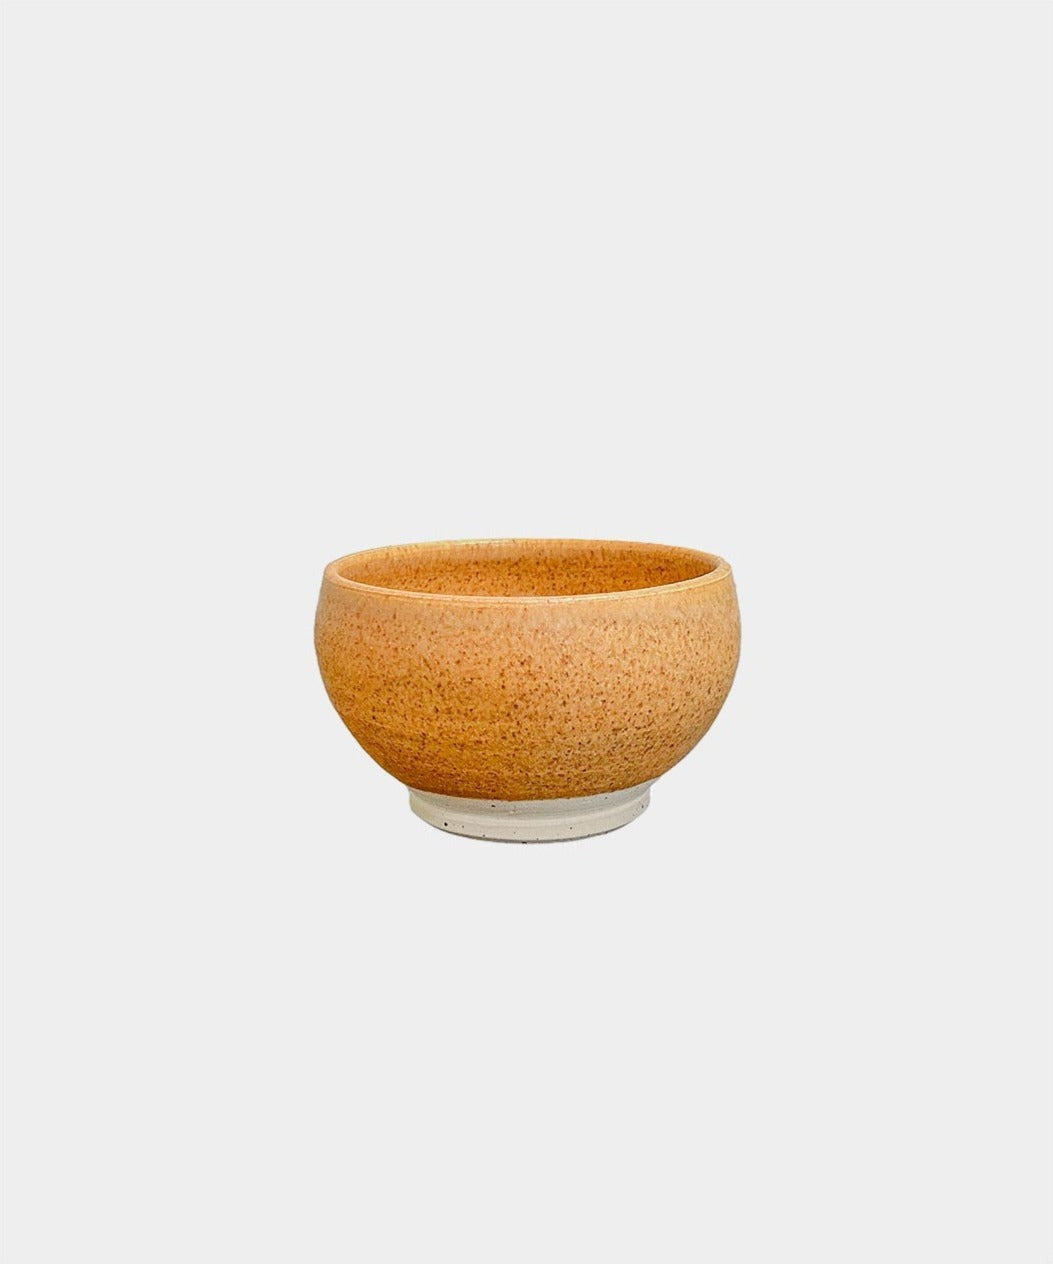 Håndlavet Keramik Nøddeskål | HASEL by Vang | Kerama